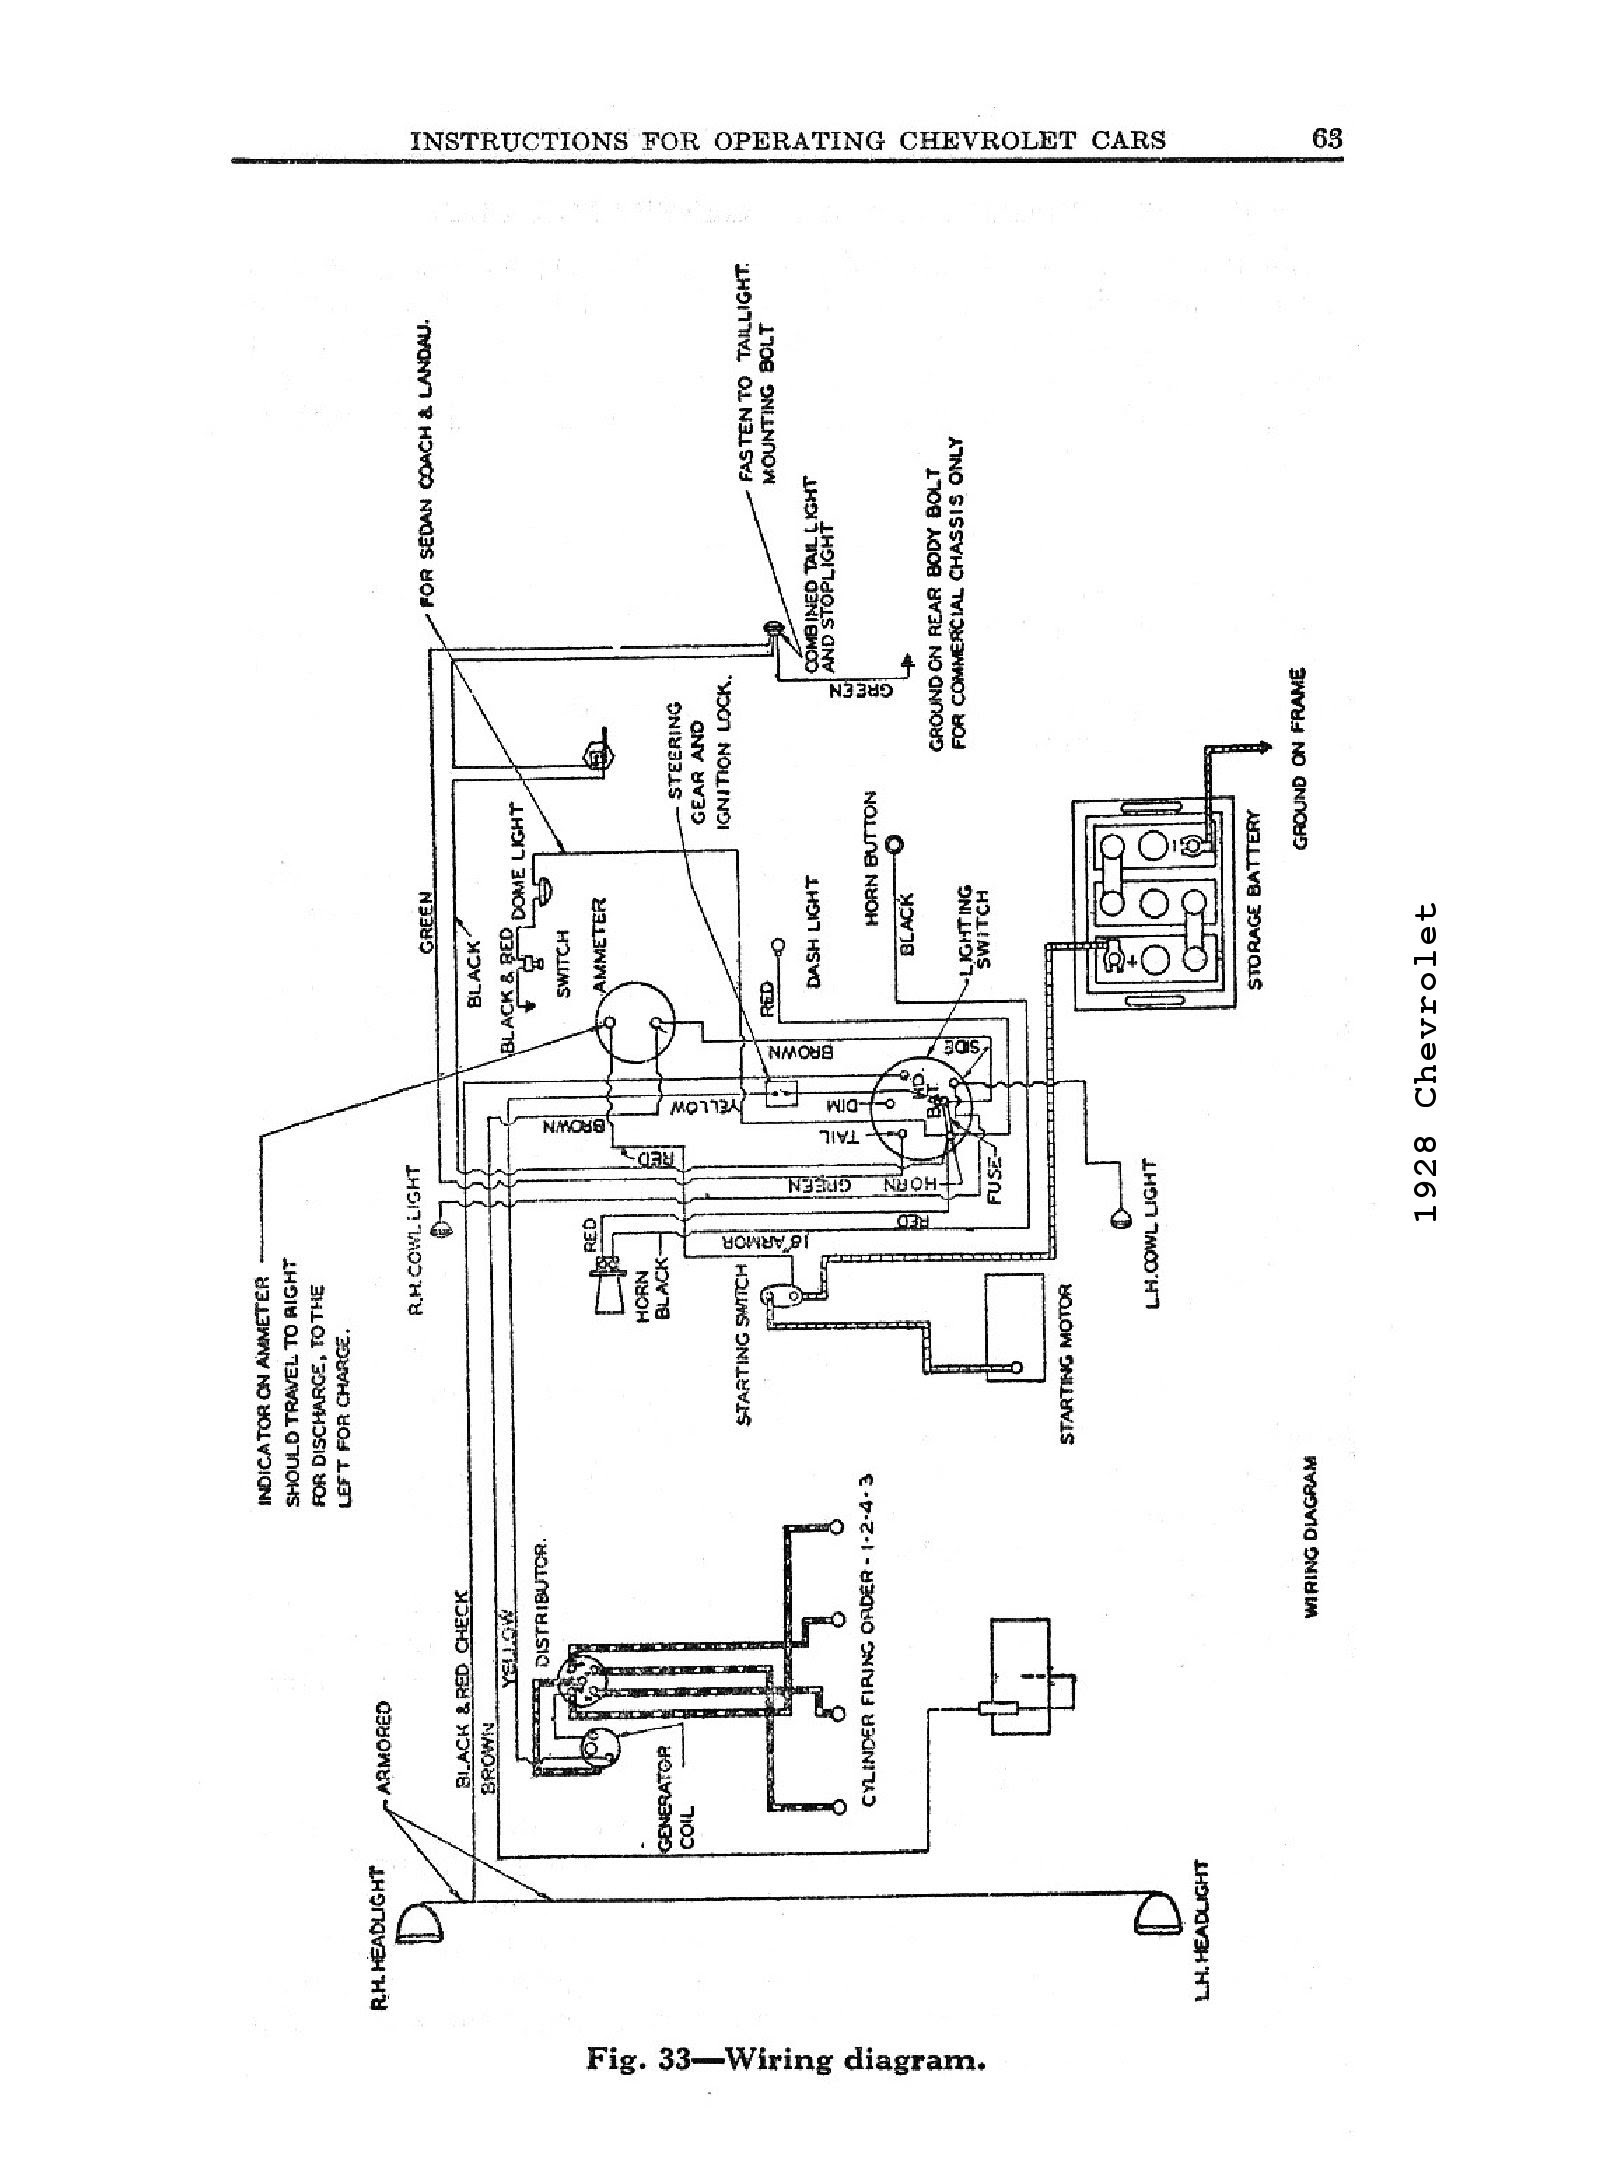 1955 chevrolet car wiring diagrams 3 mb. 1954 Chevy Bel Air Wiring Diagram Wiring Diagram Solve Network B Solve Network B Piuconzero It